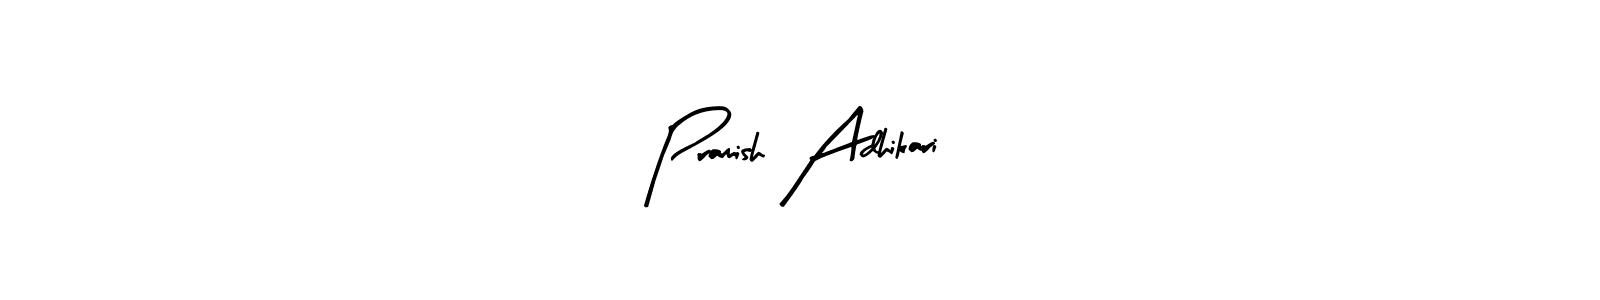 Make a beautiful signature design for name Pramish Adhikari. Use this online signature maker to create a handwritten signature for free. Pramish Adhikari signature style 8 images and pictures png